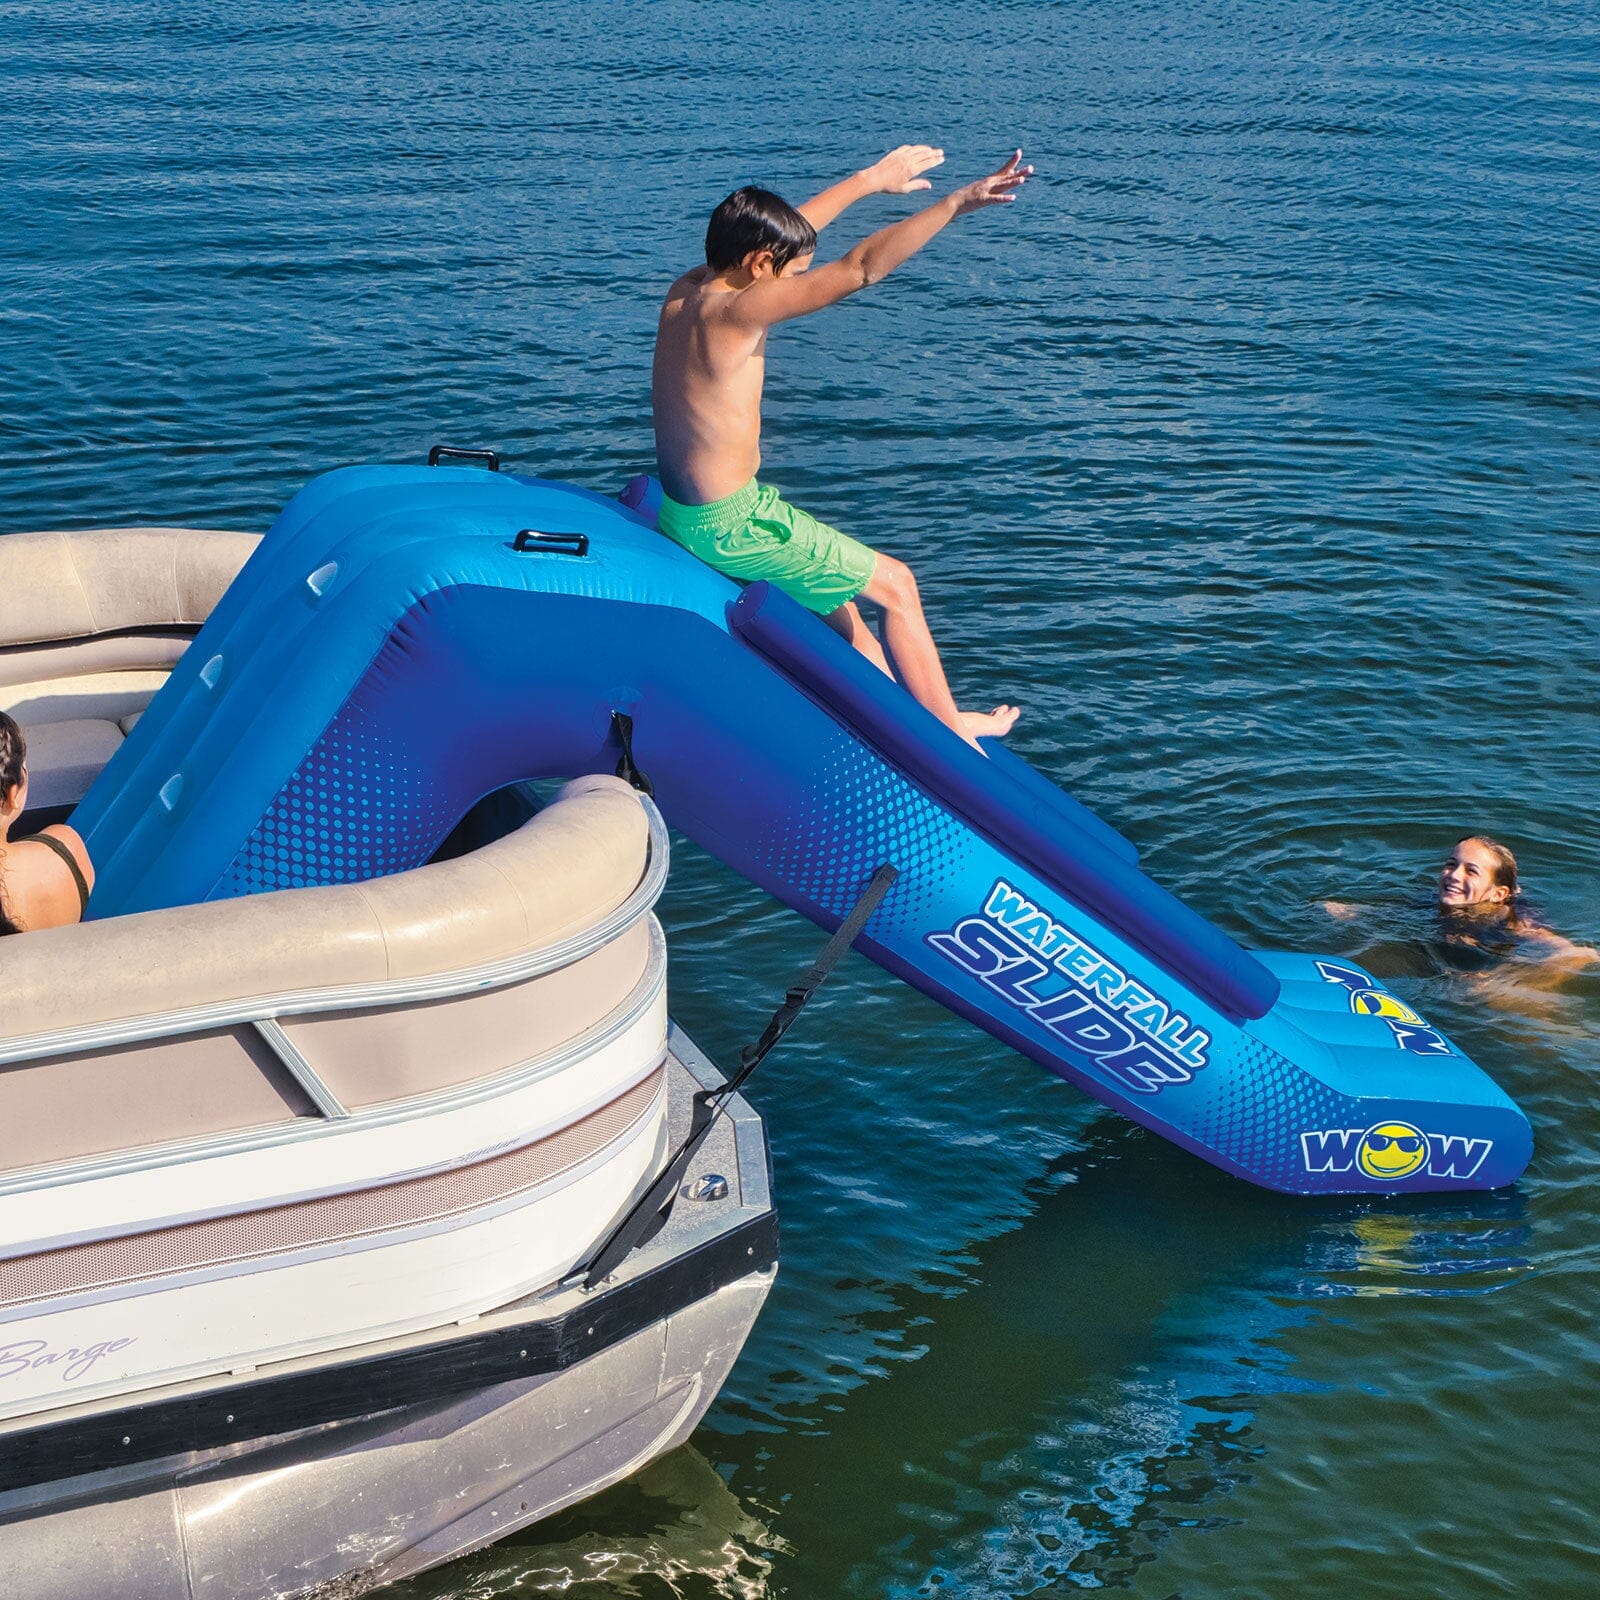 Slide water toy - FREEFALL PONTOON - AquaGlide - inflatable